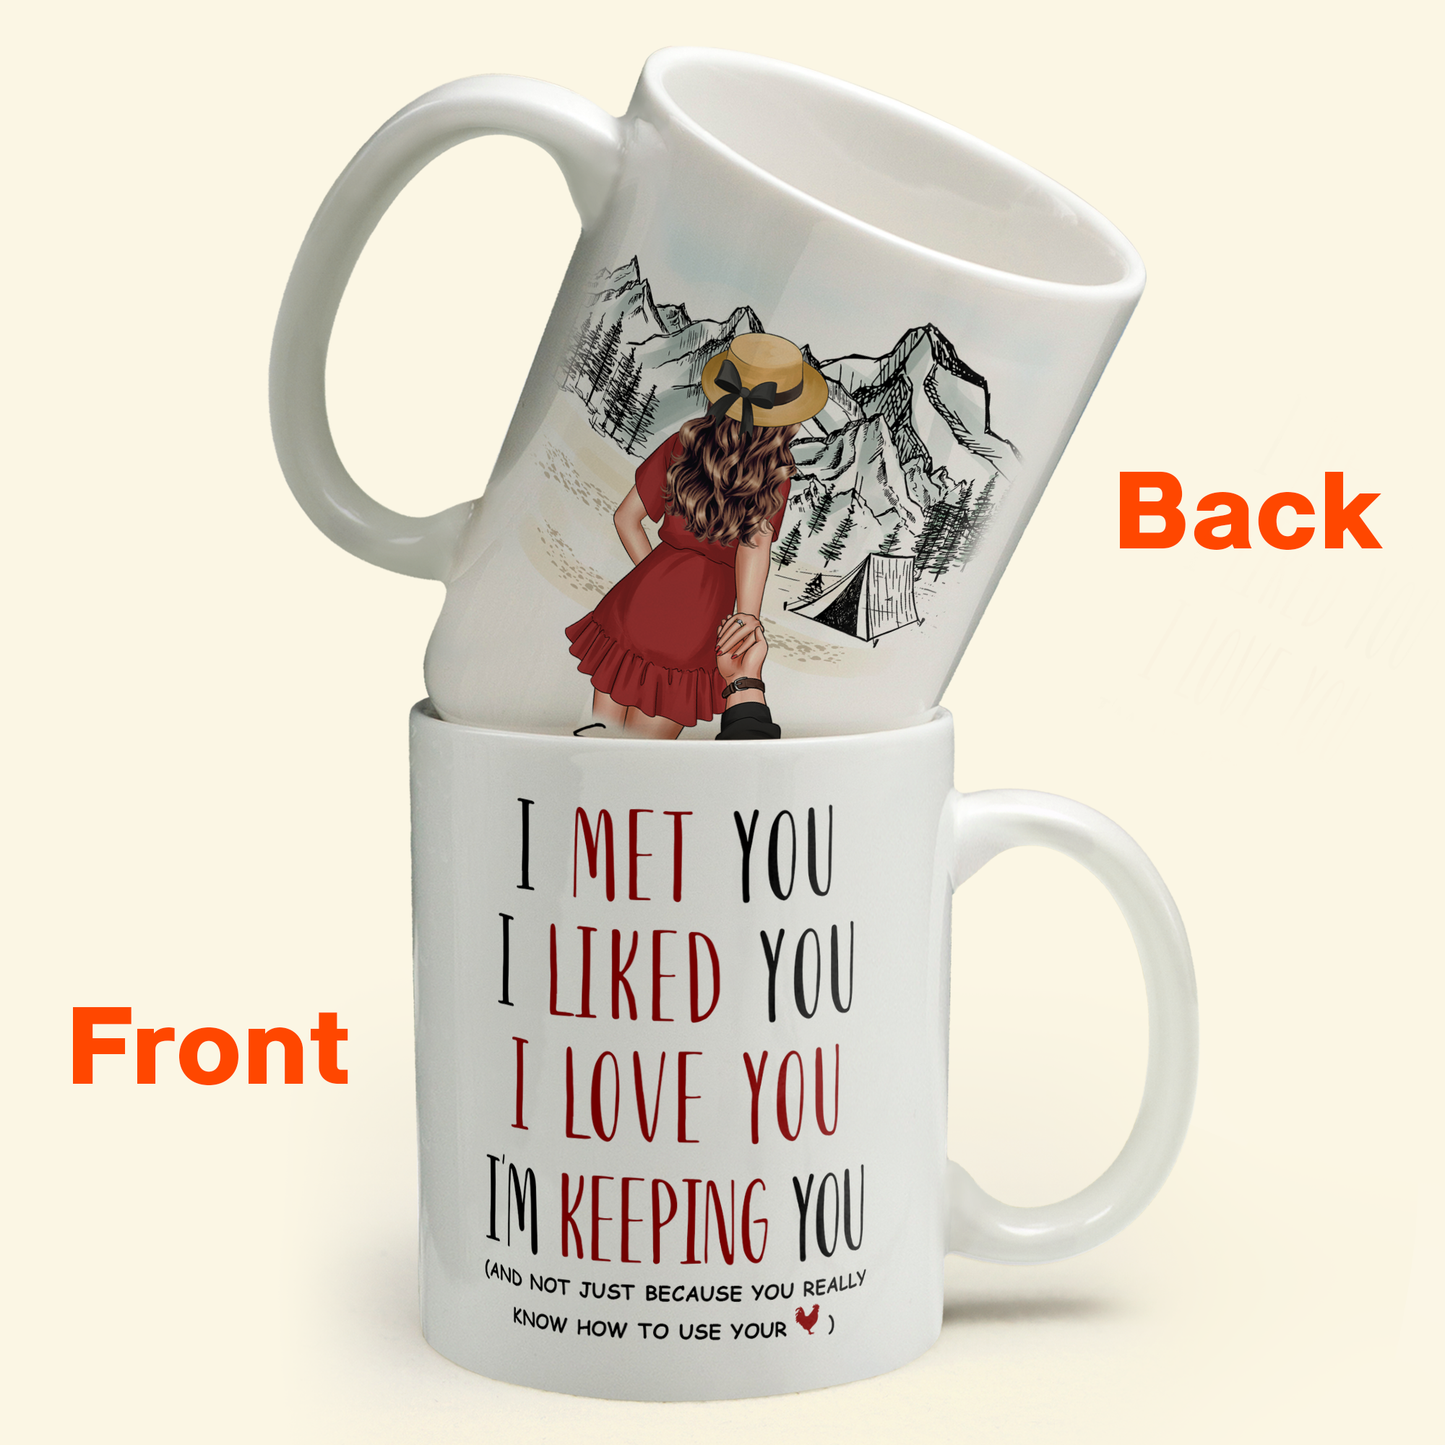 I'm Keeping You - Personalized Mug - Birthday, Valentine's Day Gift For Husband, Boyfriend, Funny Gift